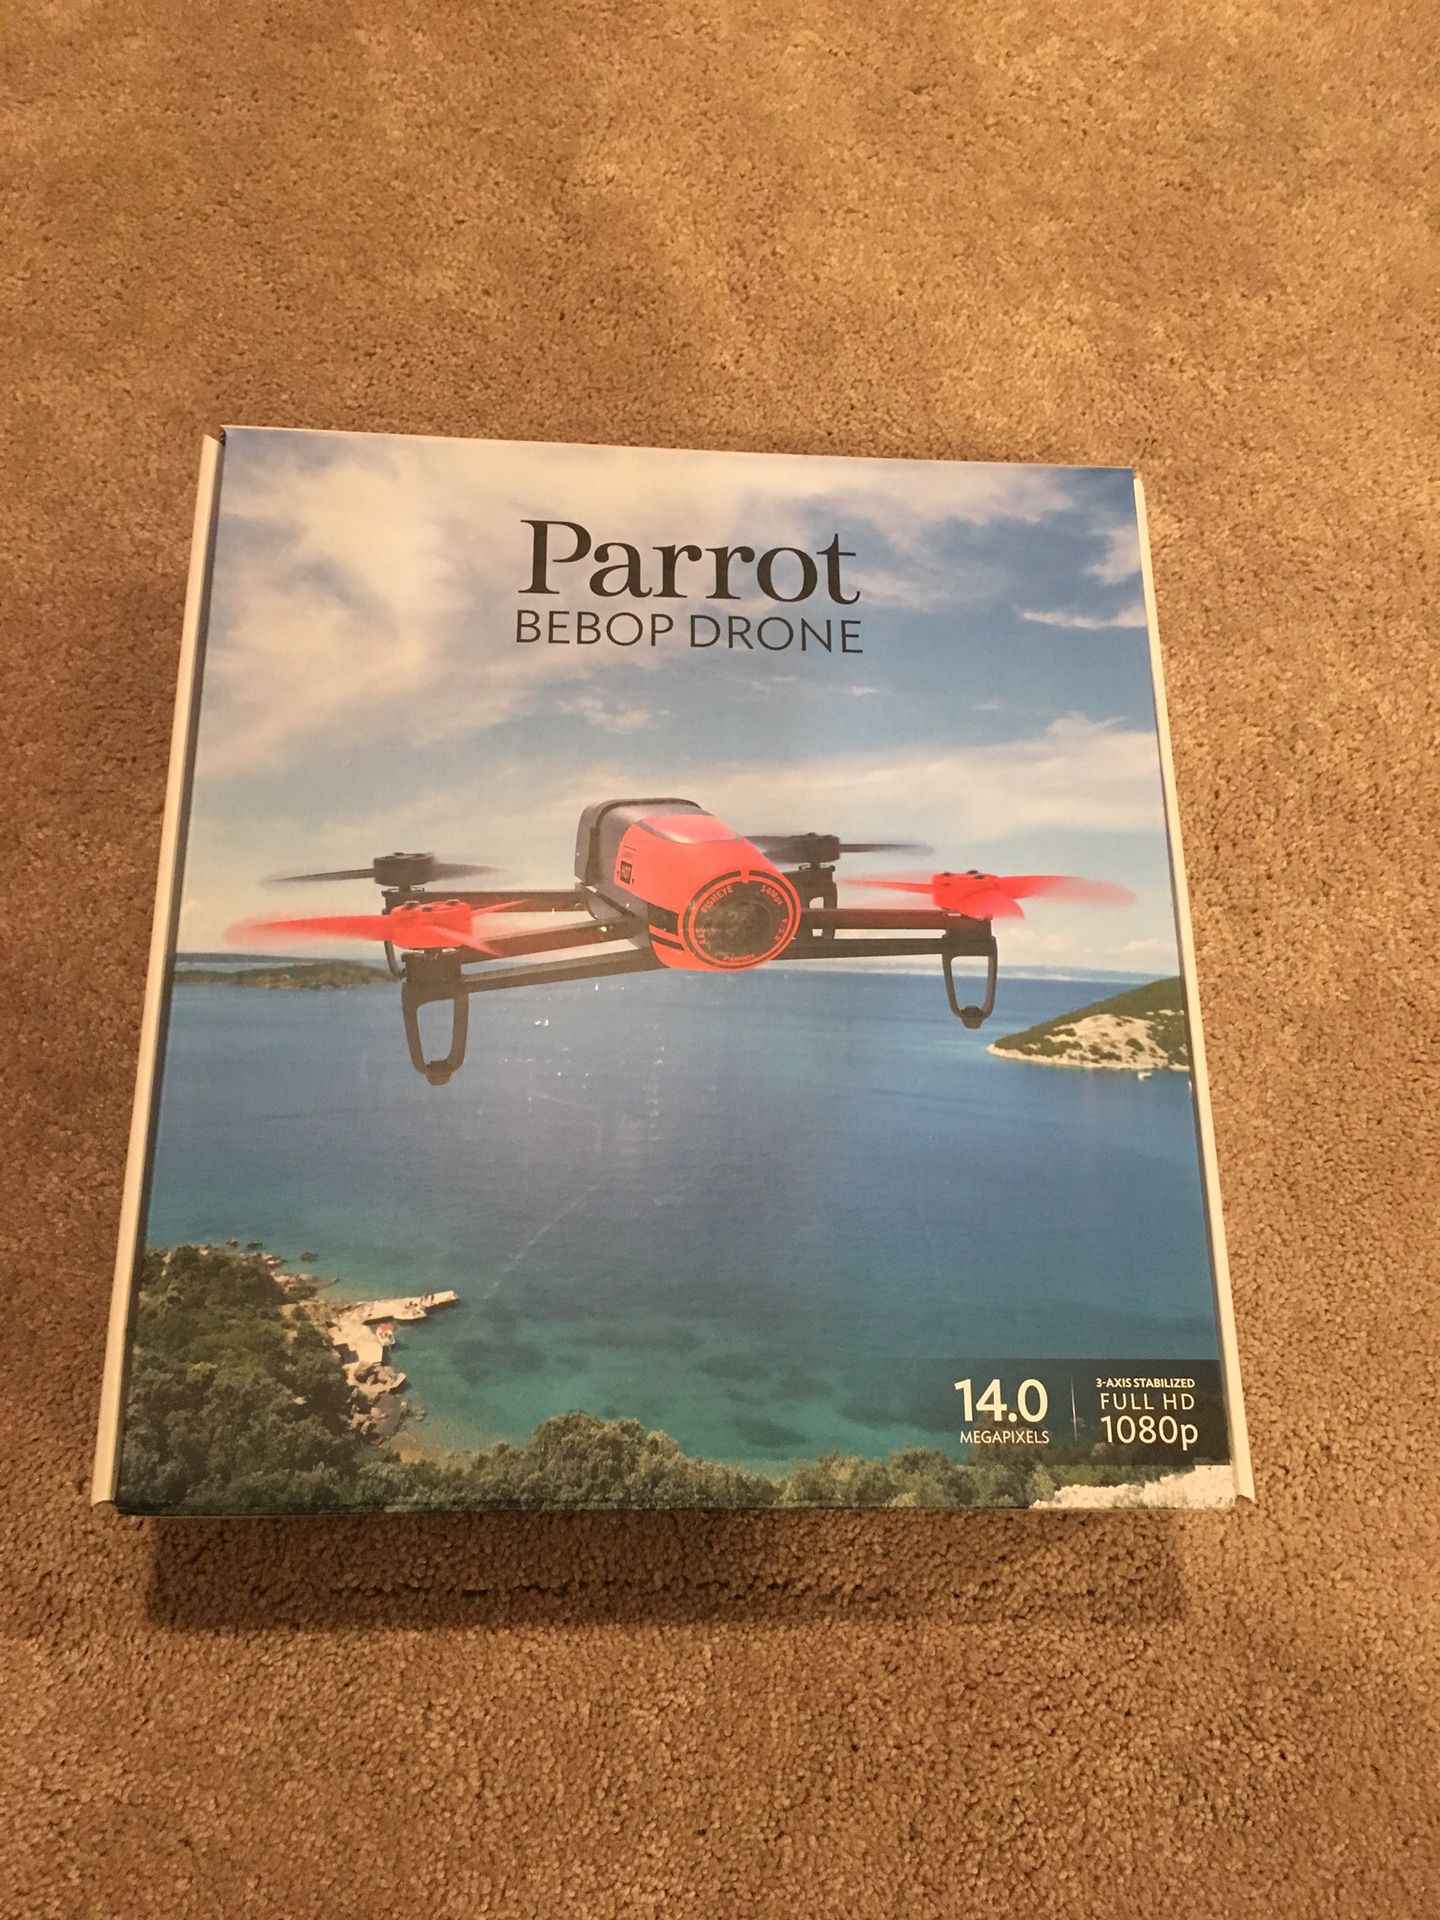 Parrot Bebop Drone RC 1080p digital camera